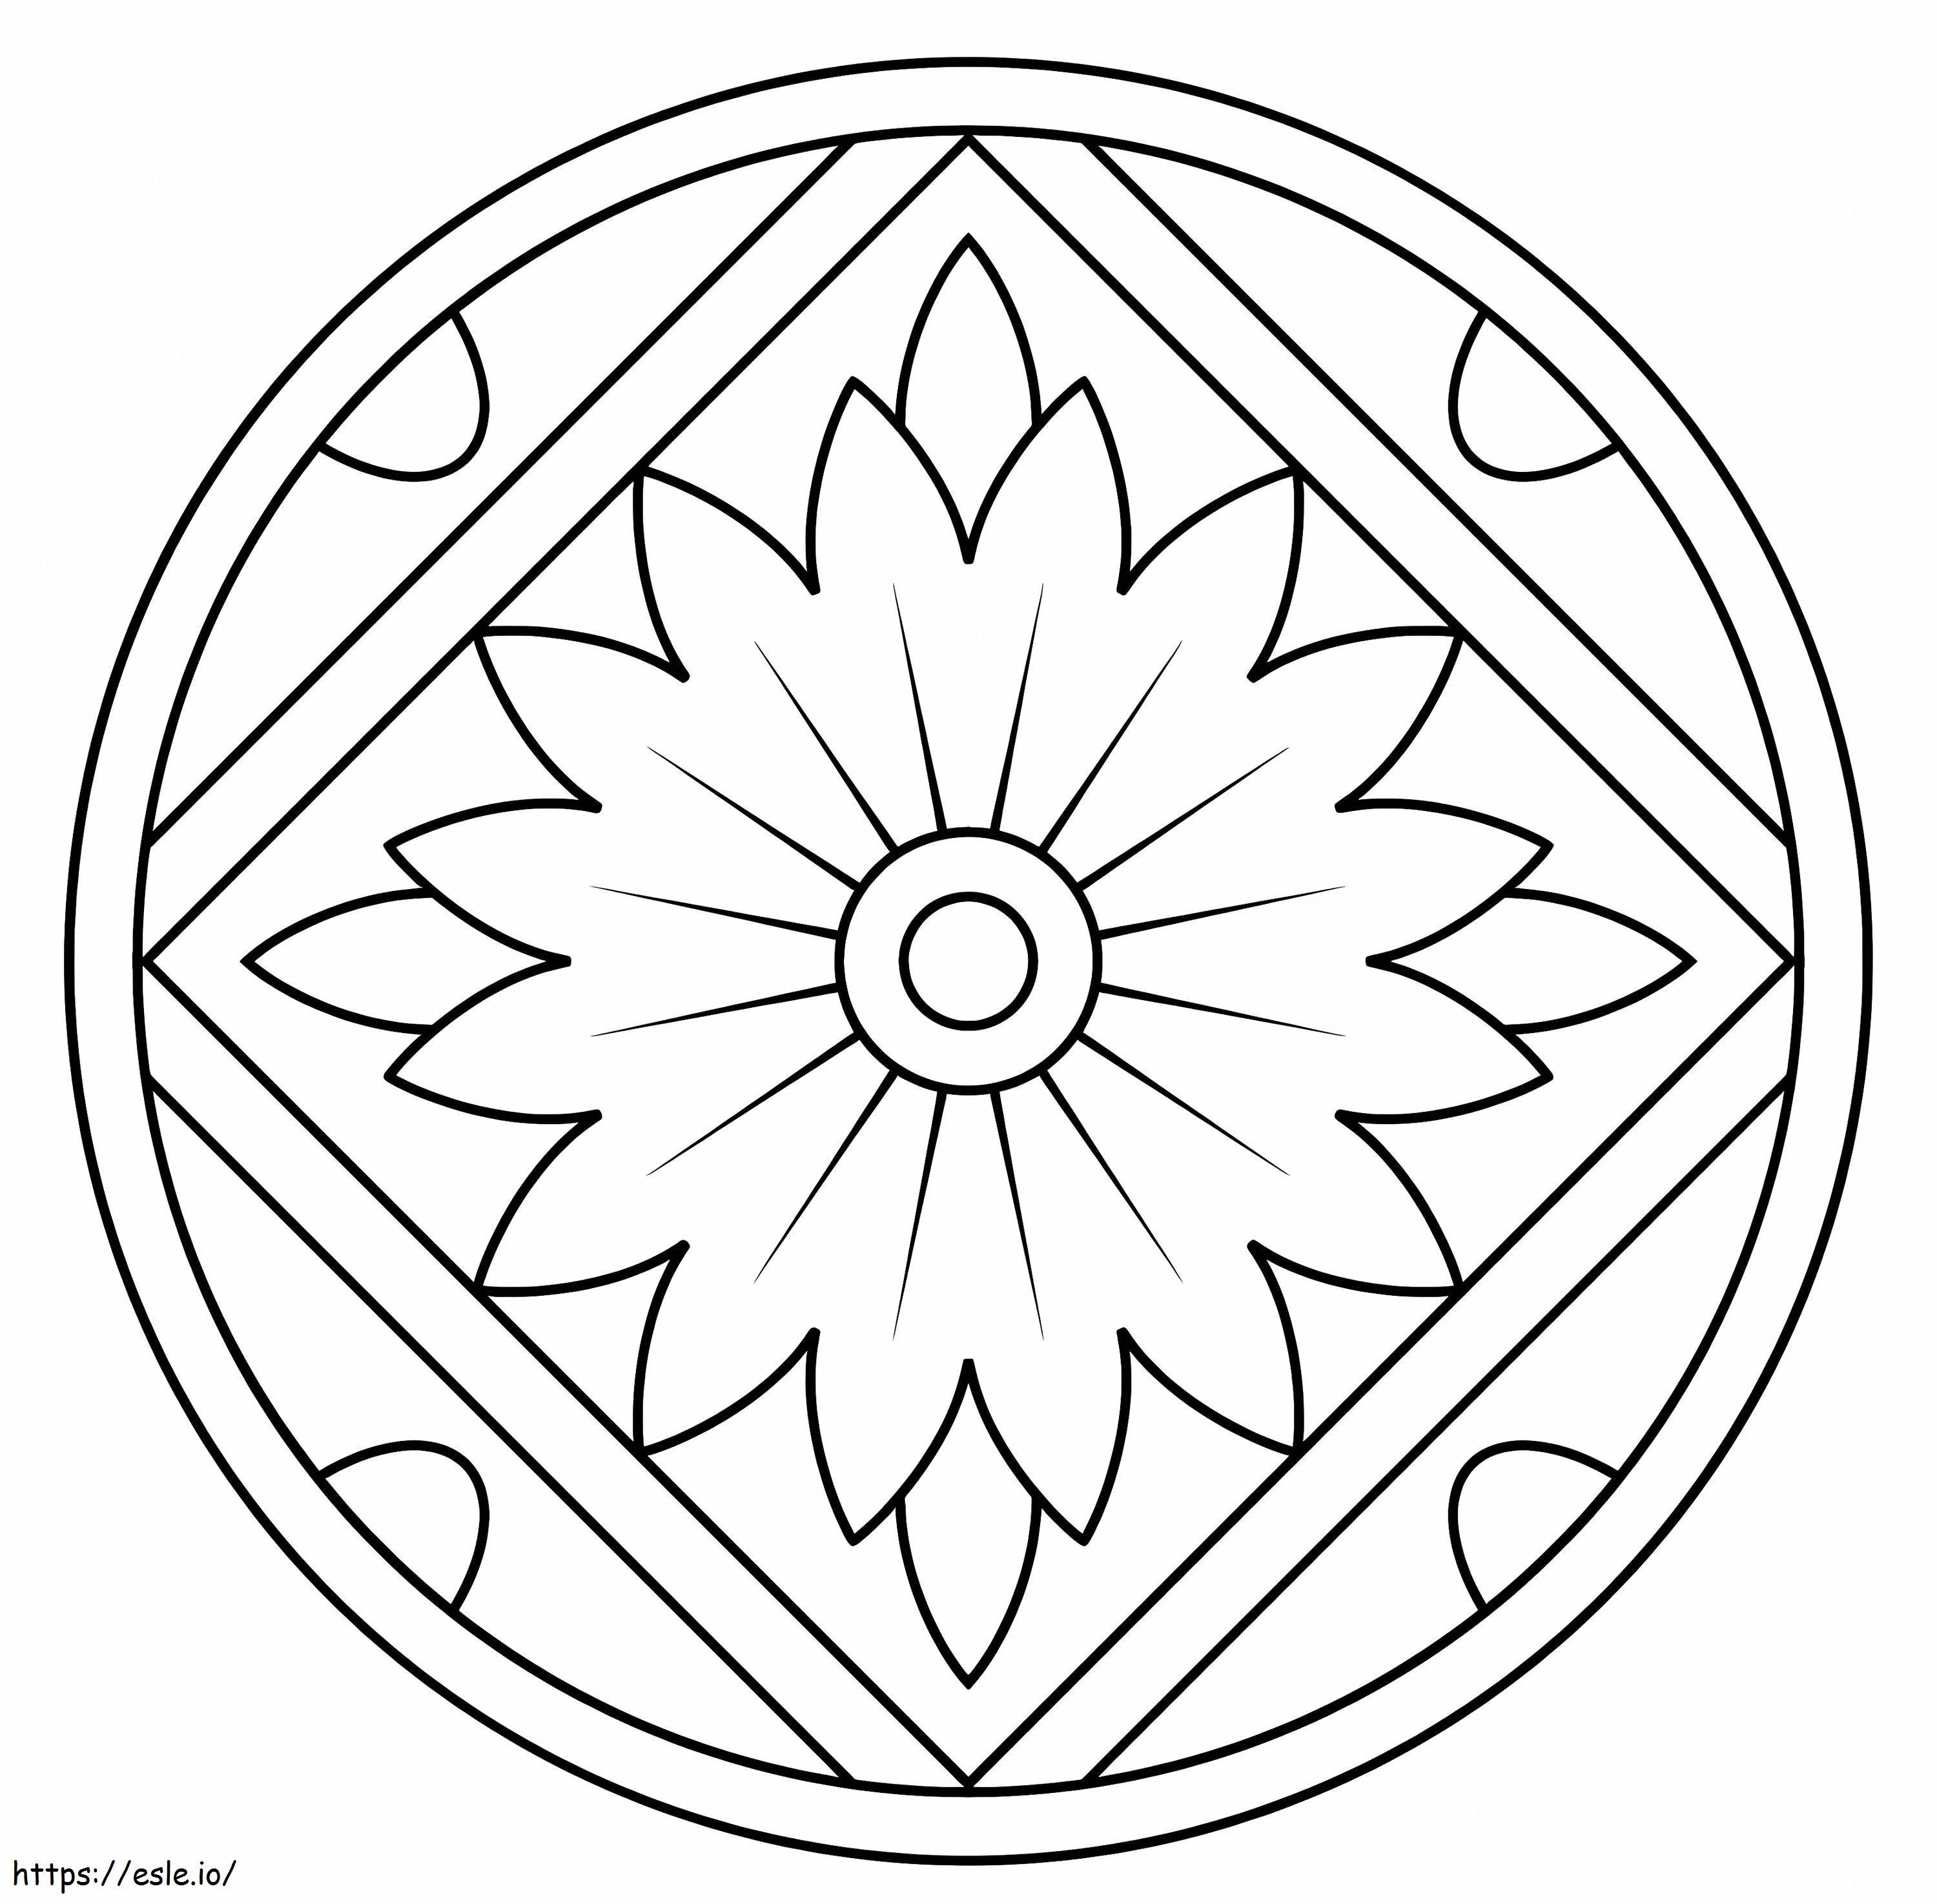 Flower Mandala Free Printable coloring page